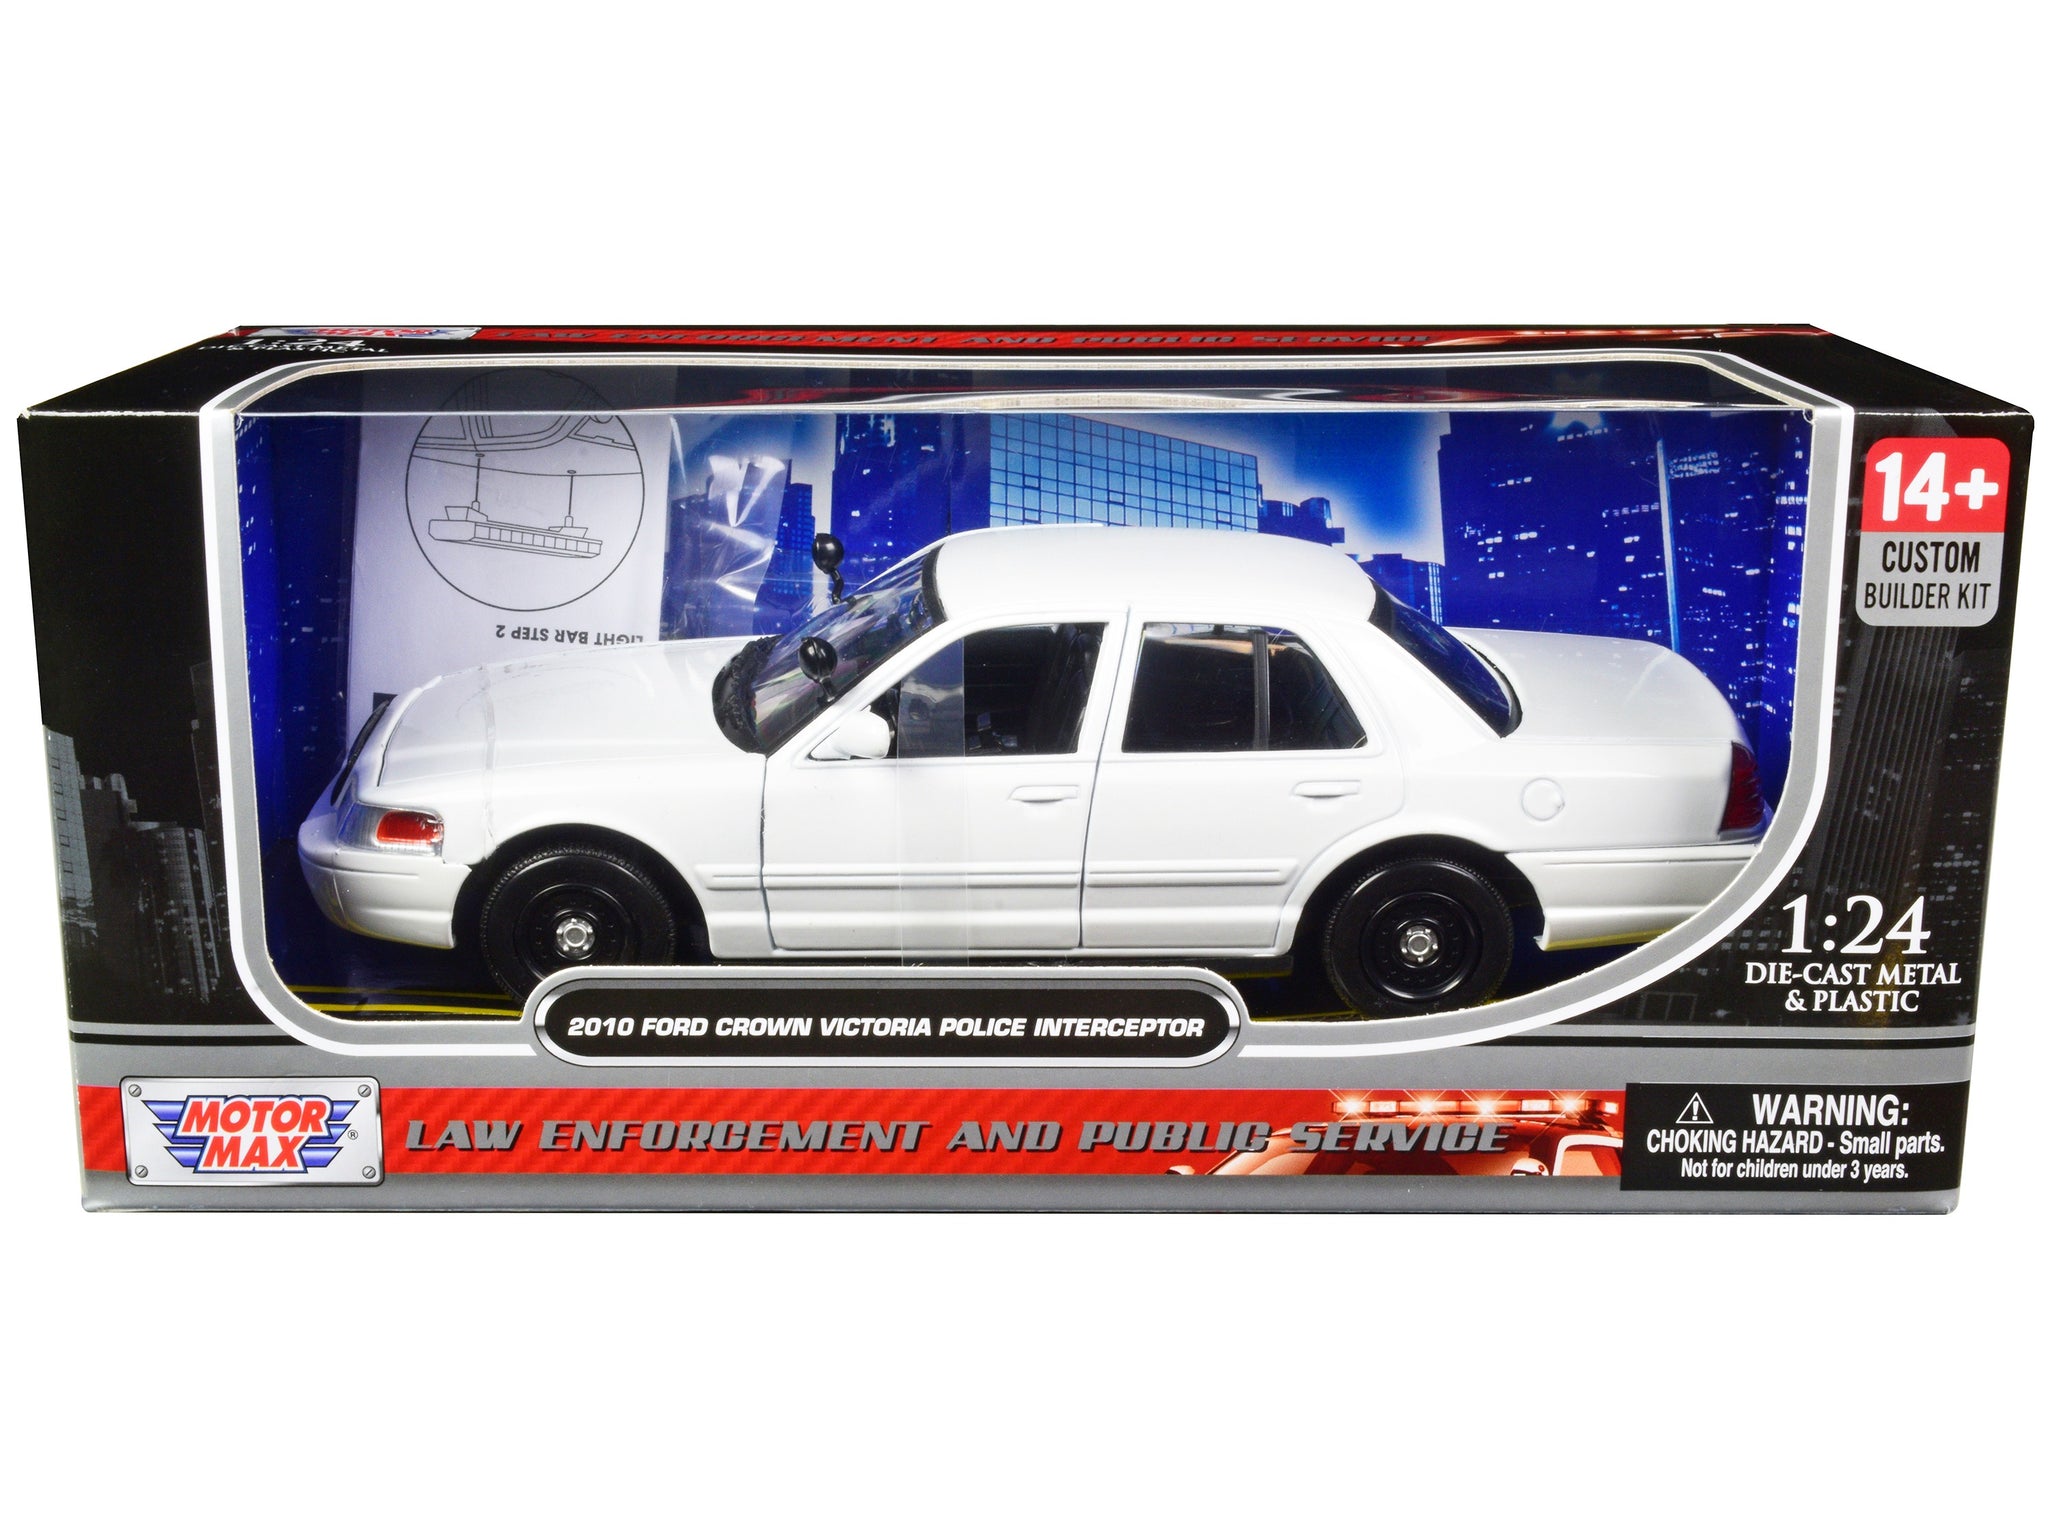 2010 Ford Crown Victoria Police Interceptor Unmarked White "Custom Builder's Kit" Series 1/24 Diecast Model Car by Motormax